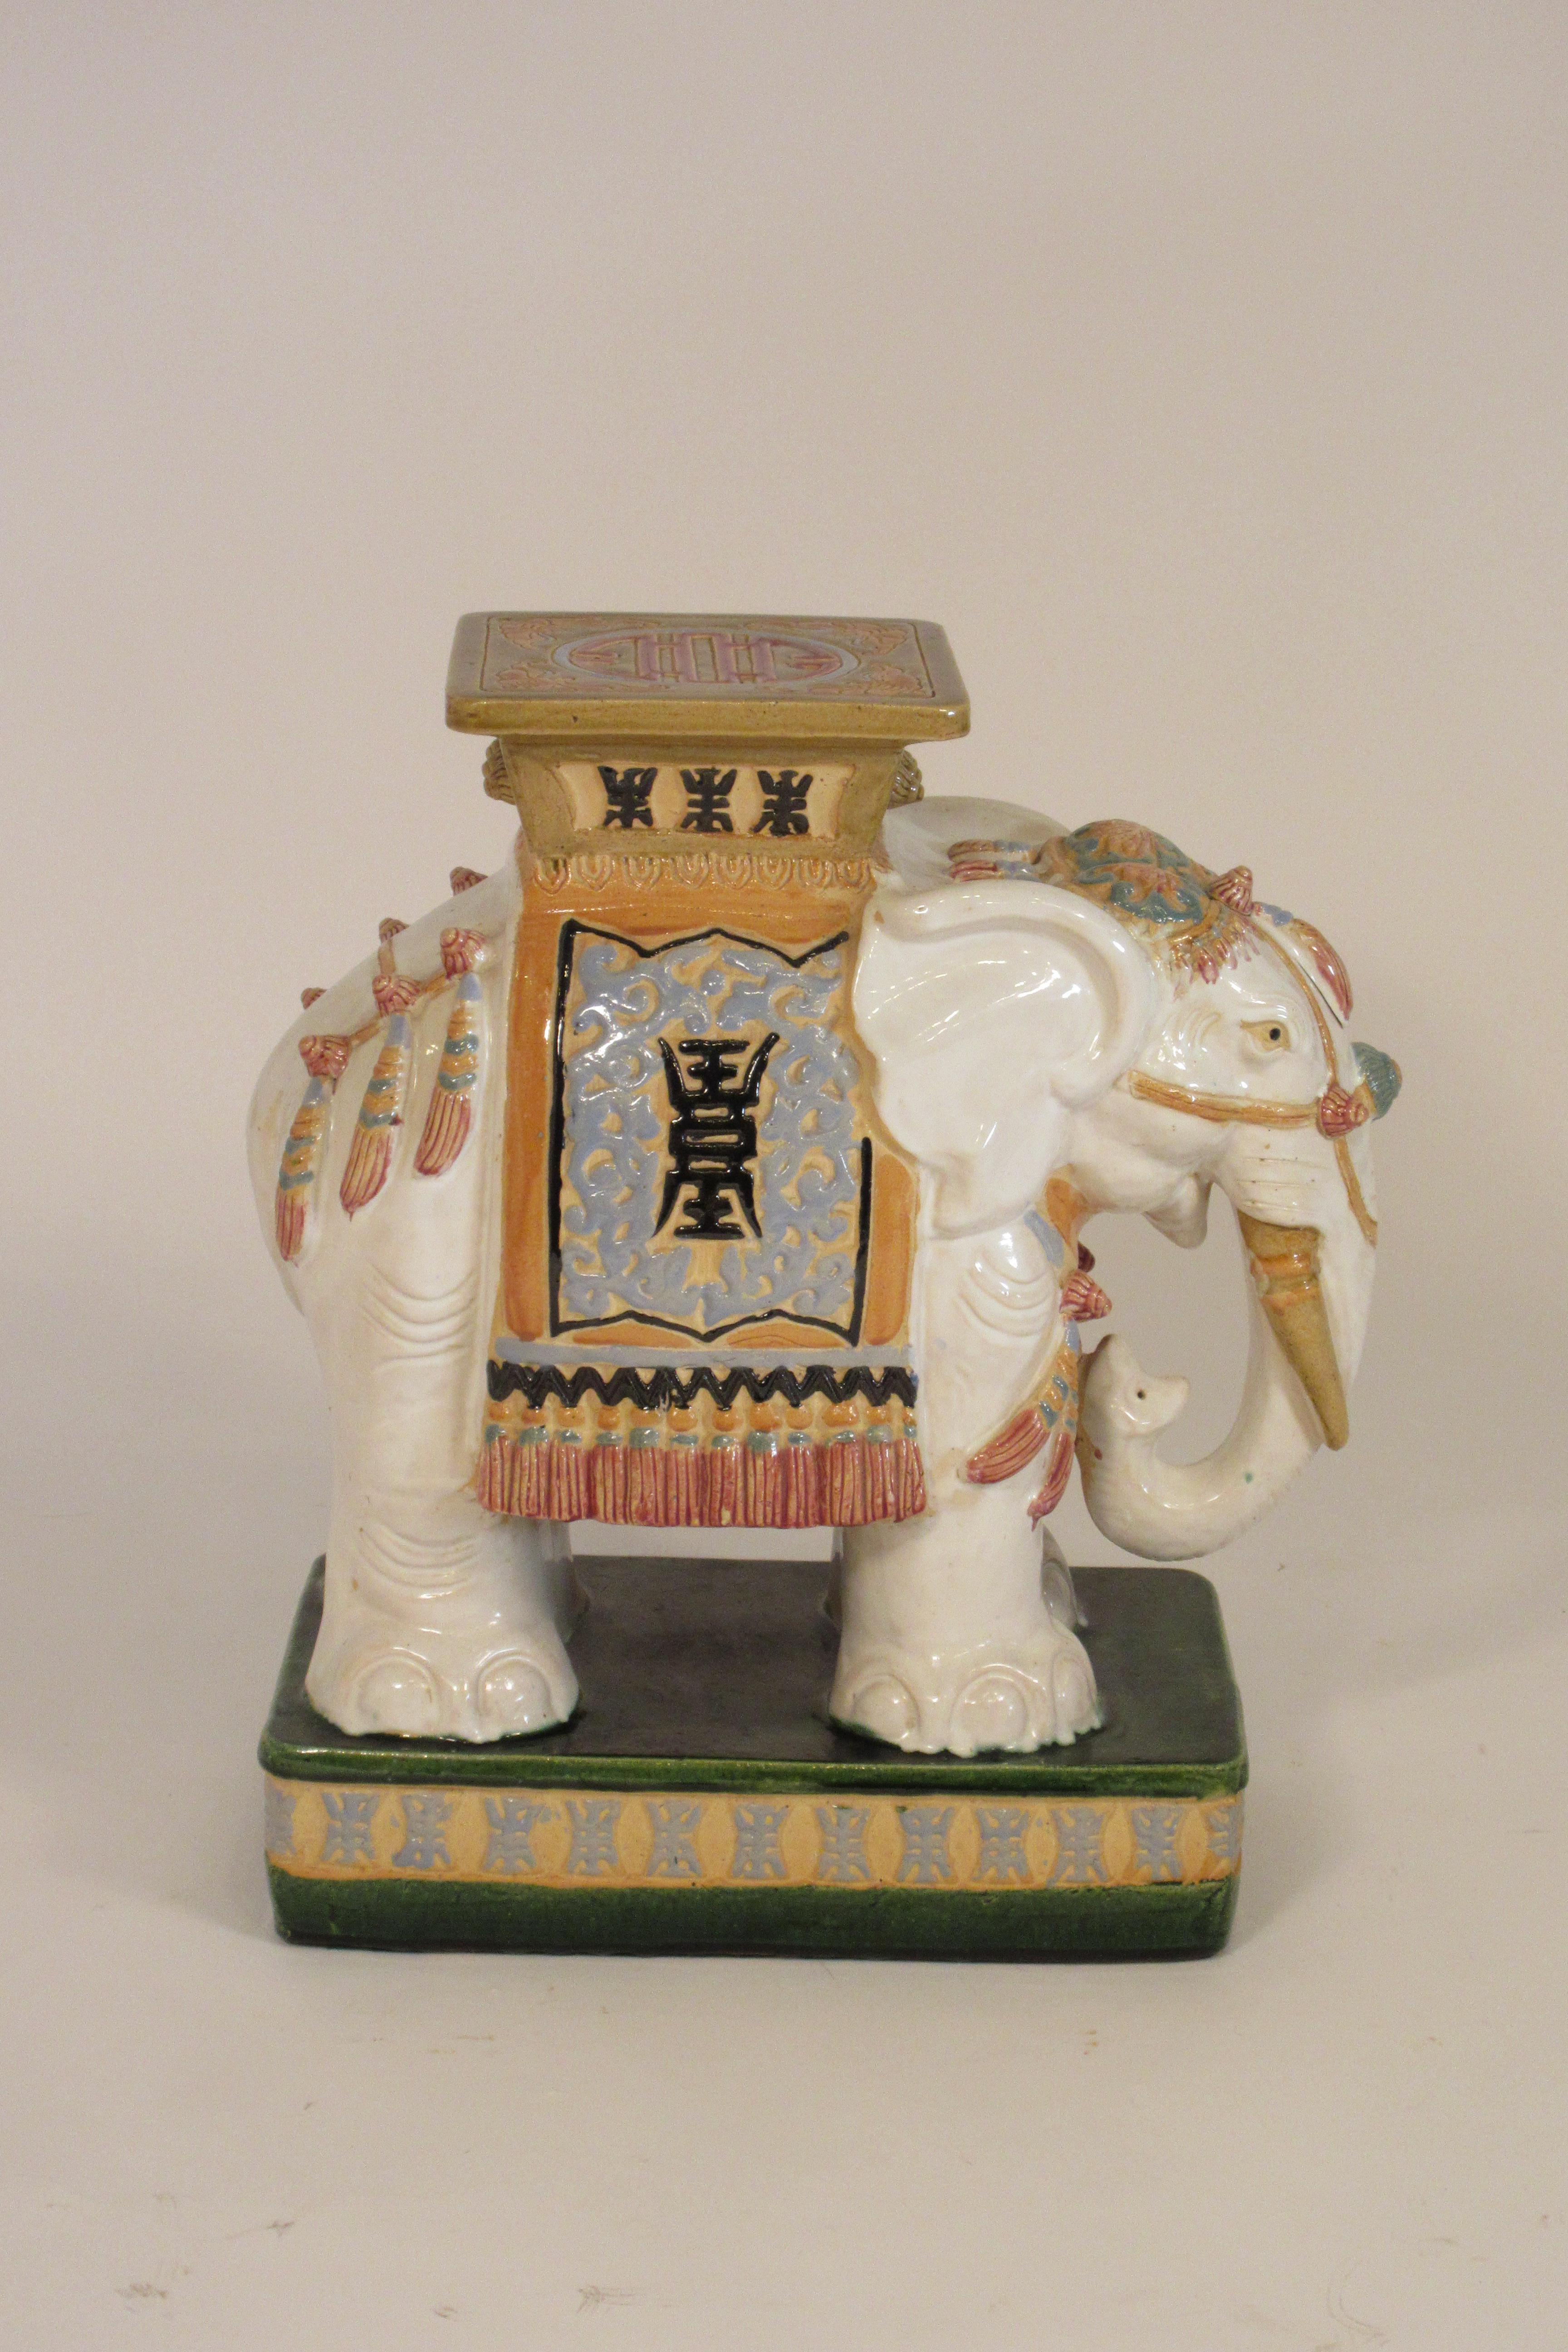 1960s Italian ceramic elephant garden stool. Hand painted.